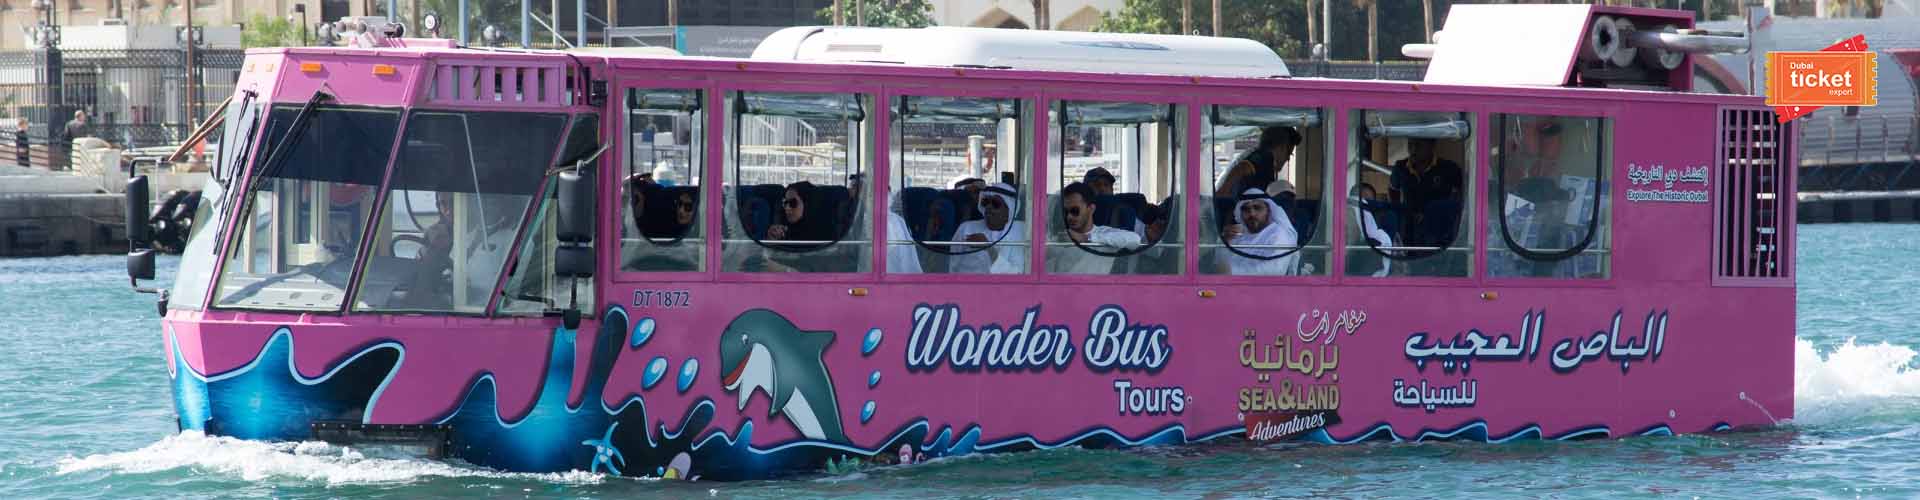 Wonder Bus Sea and Land Adventure Tour